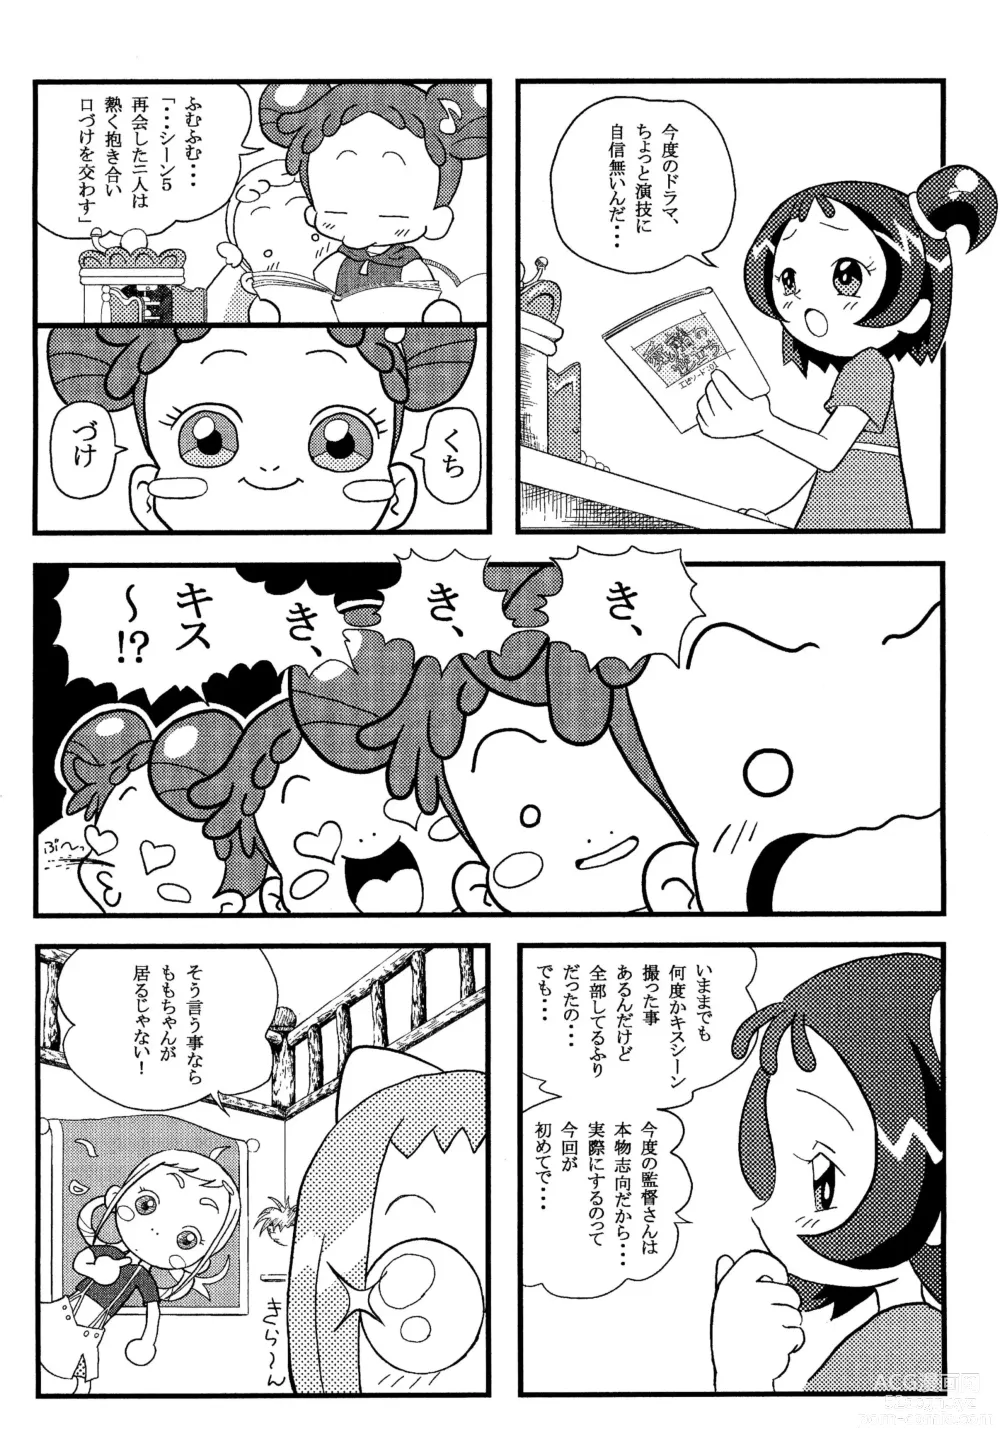 Page 6 of doujinshi Momo-On BON!